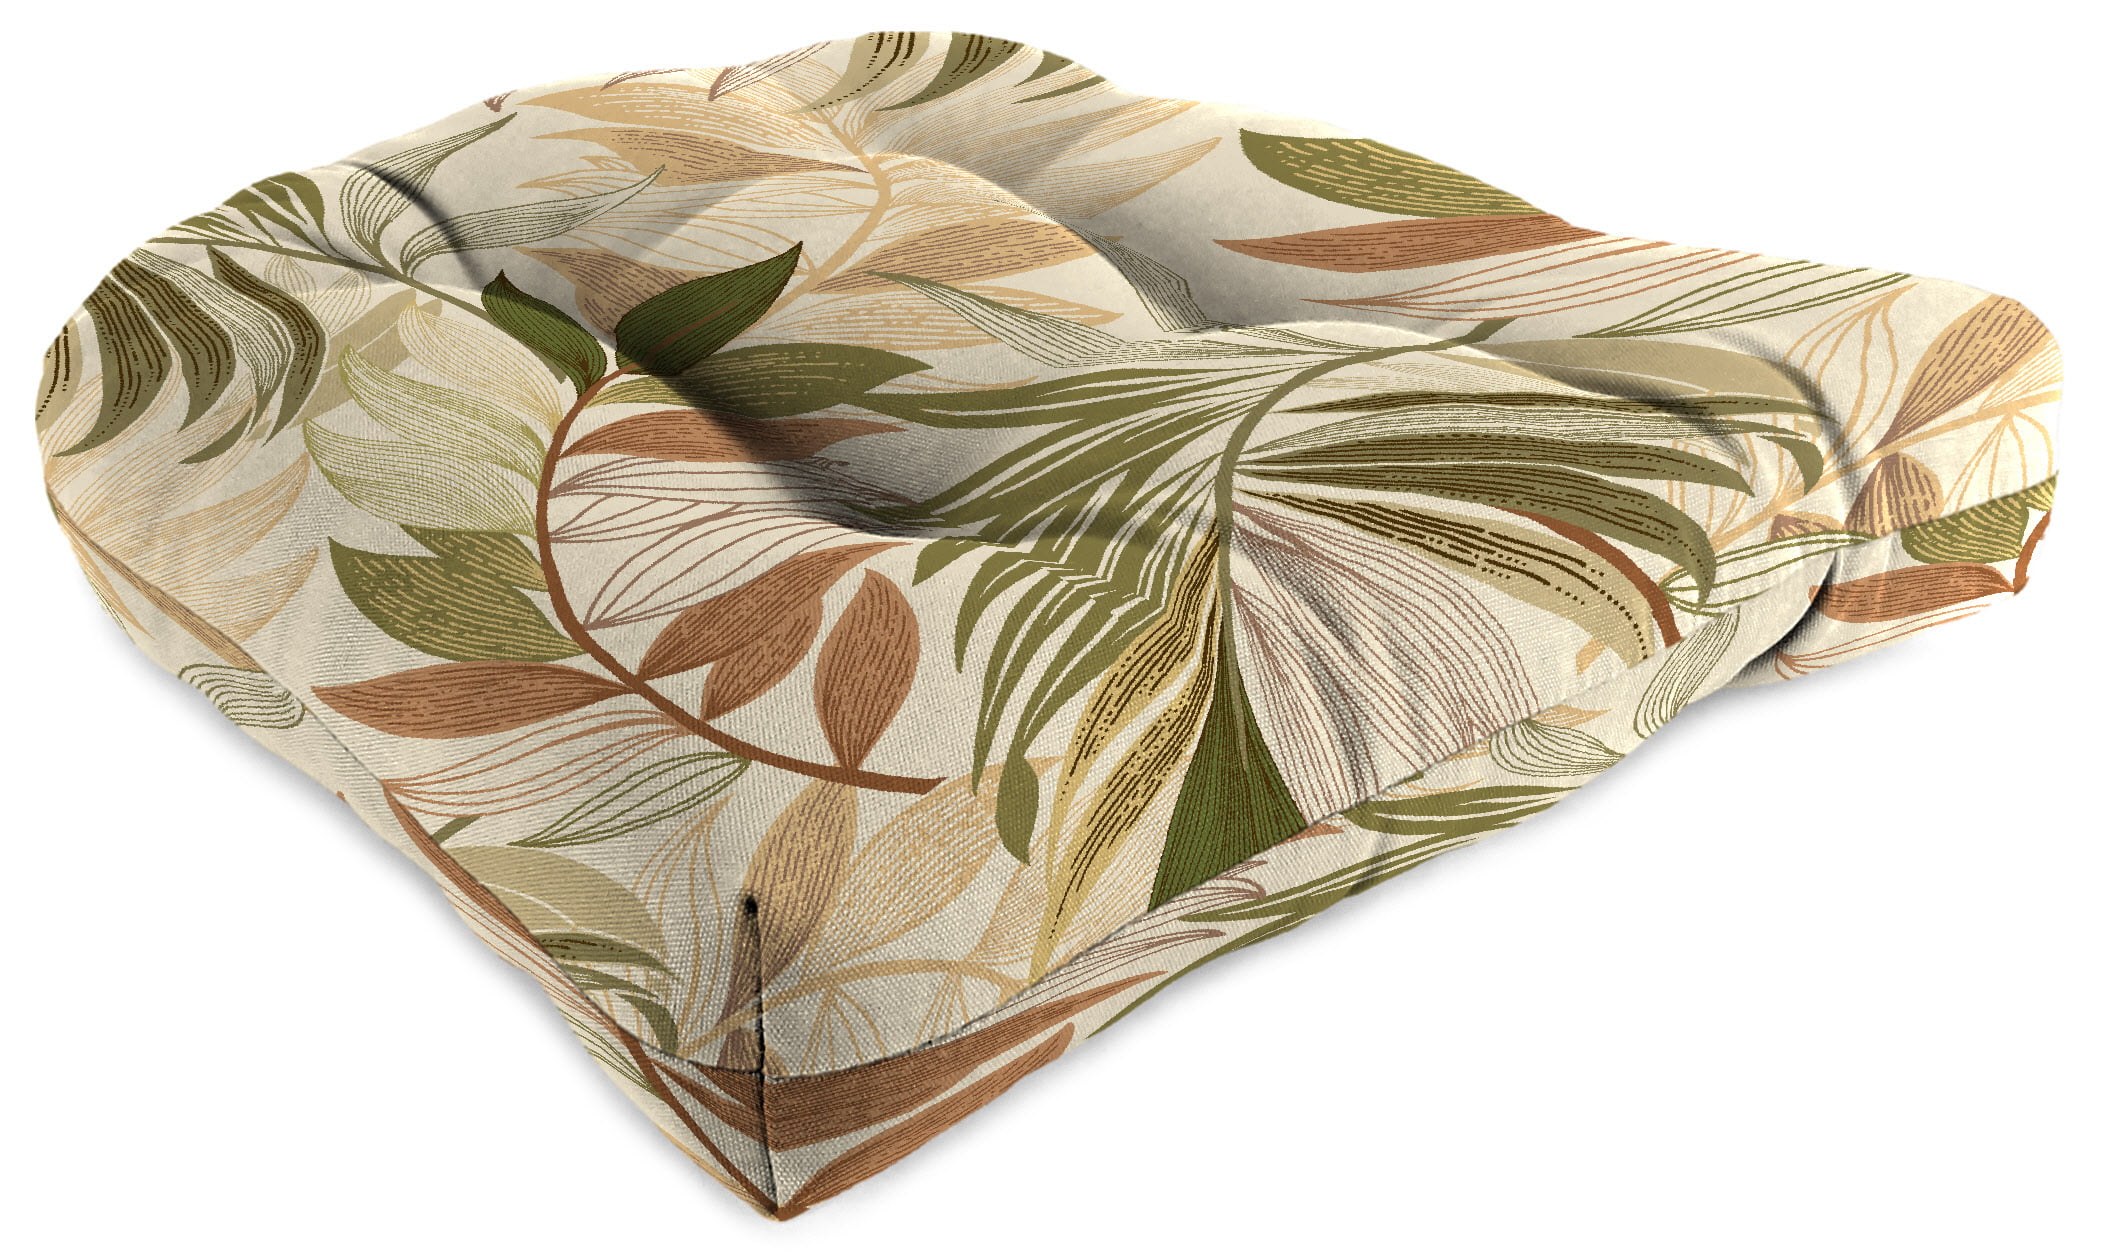 Fabric For Wicker Furniture Cushions - Donald Larmon blog